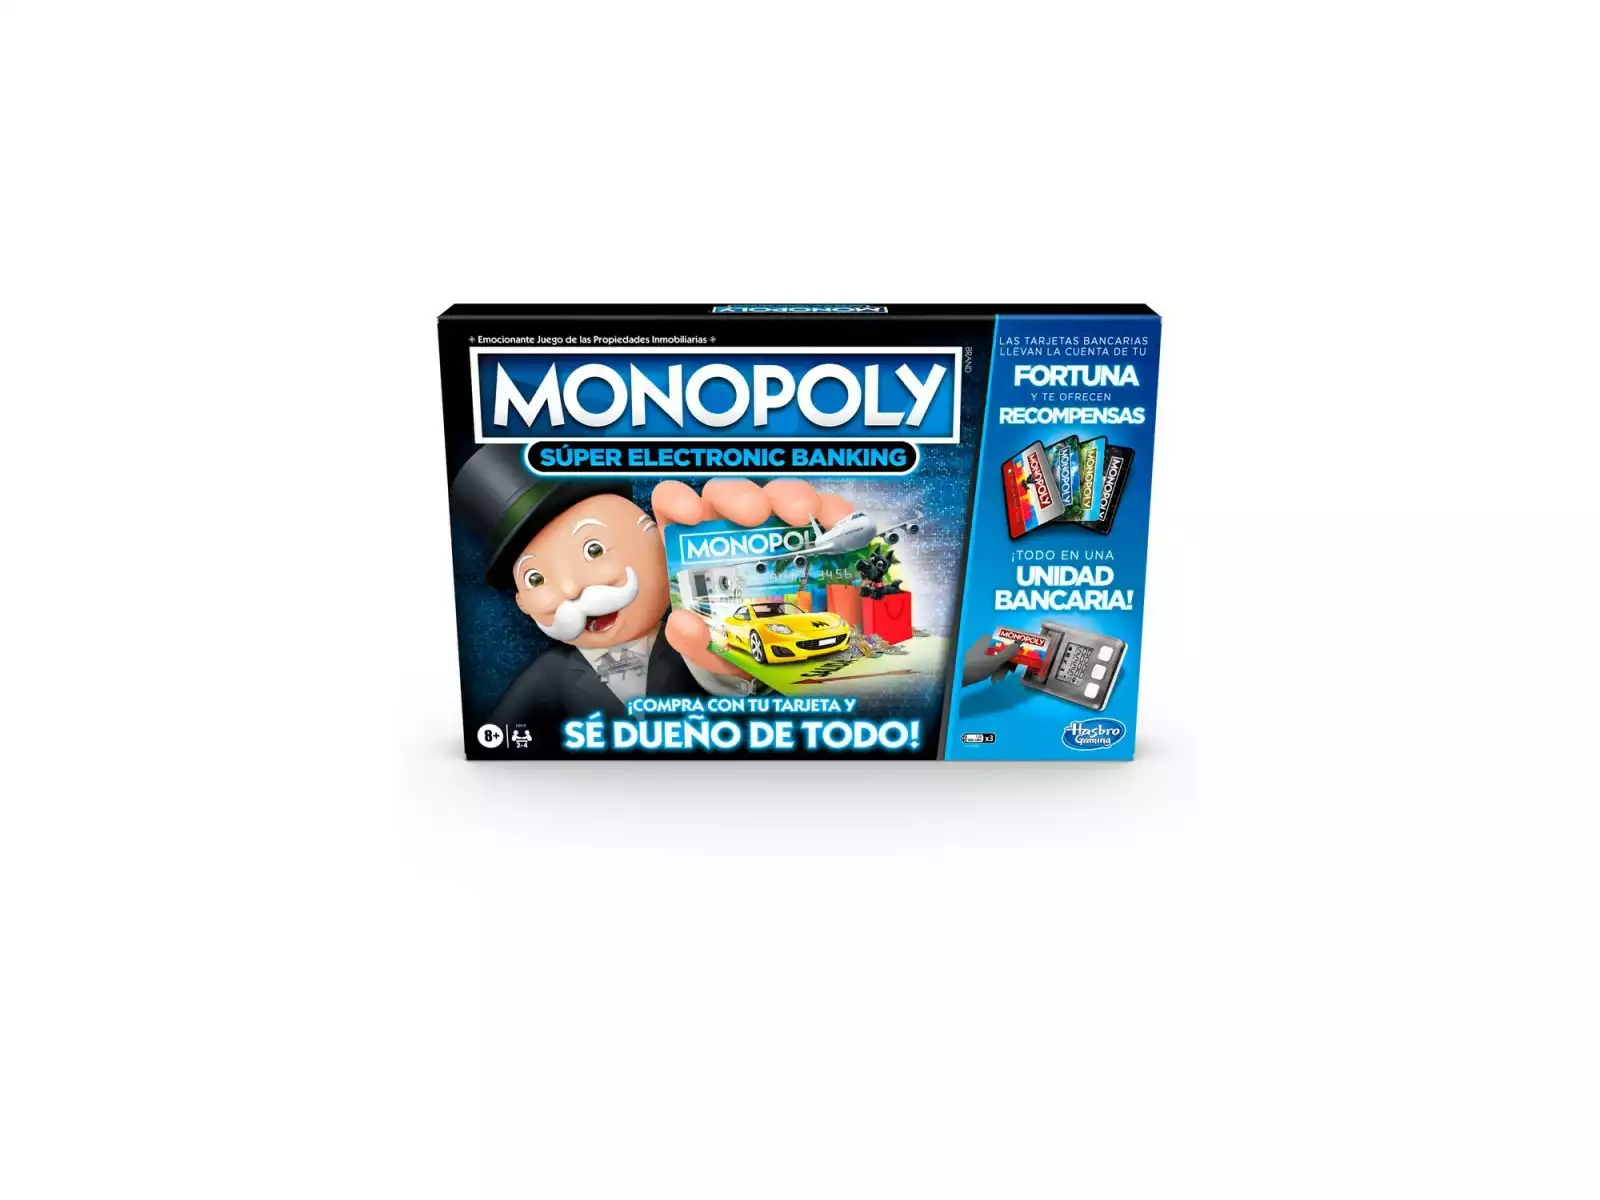 Monopoly Super Mario O Filme Hasbro F6818 - Juguetilandia